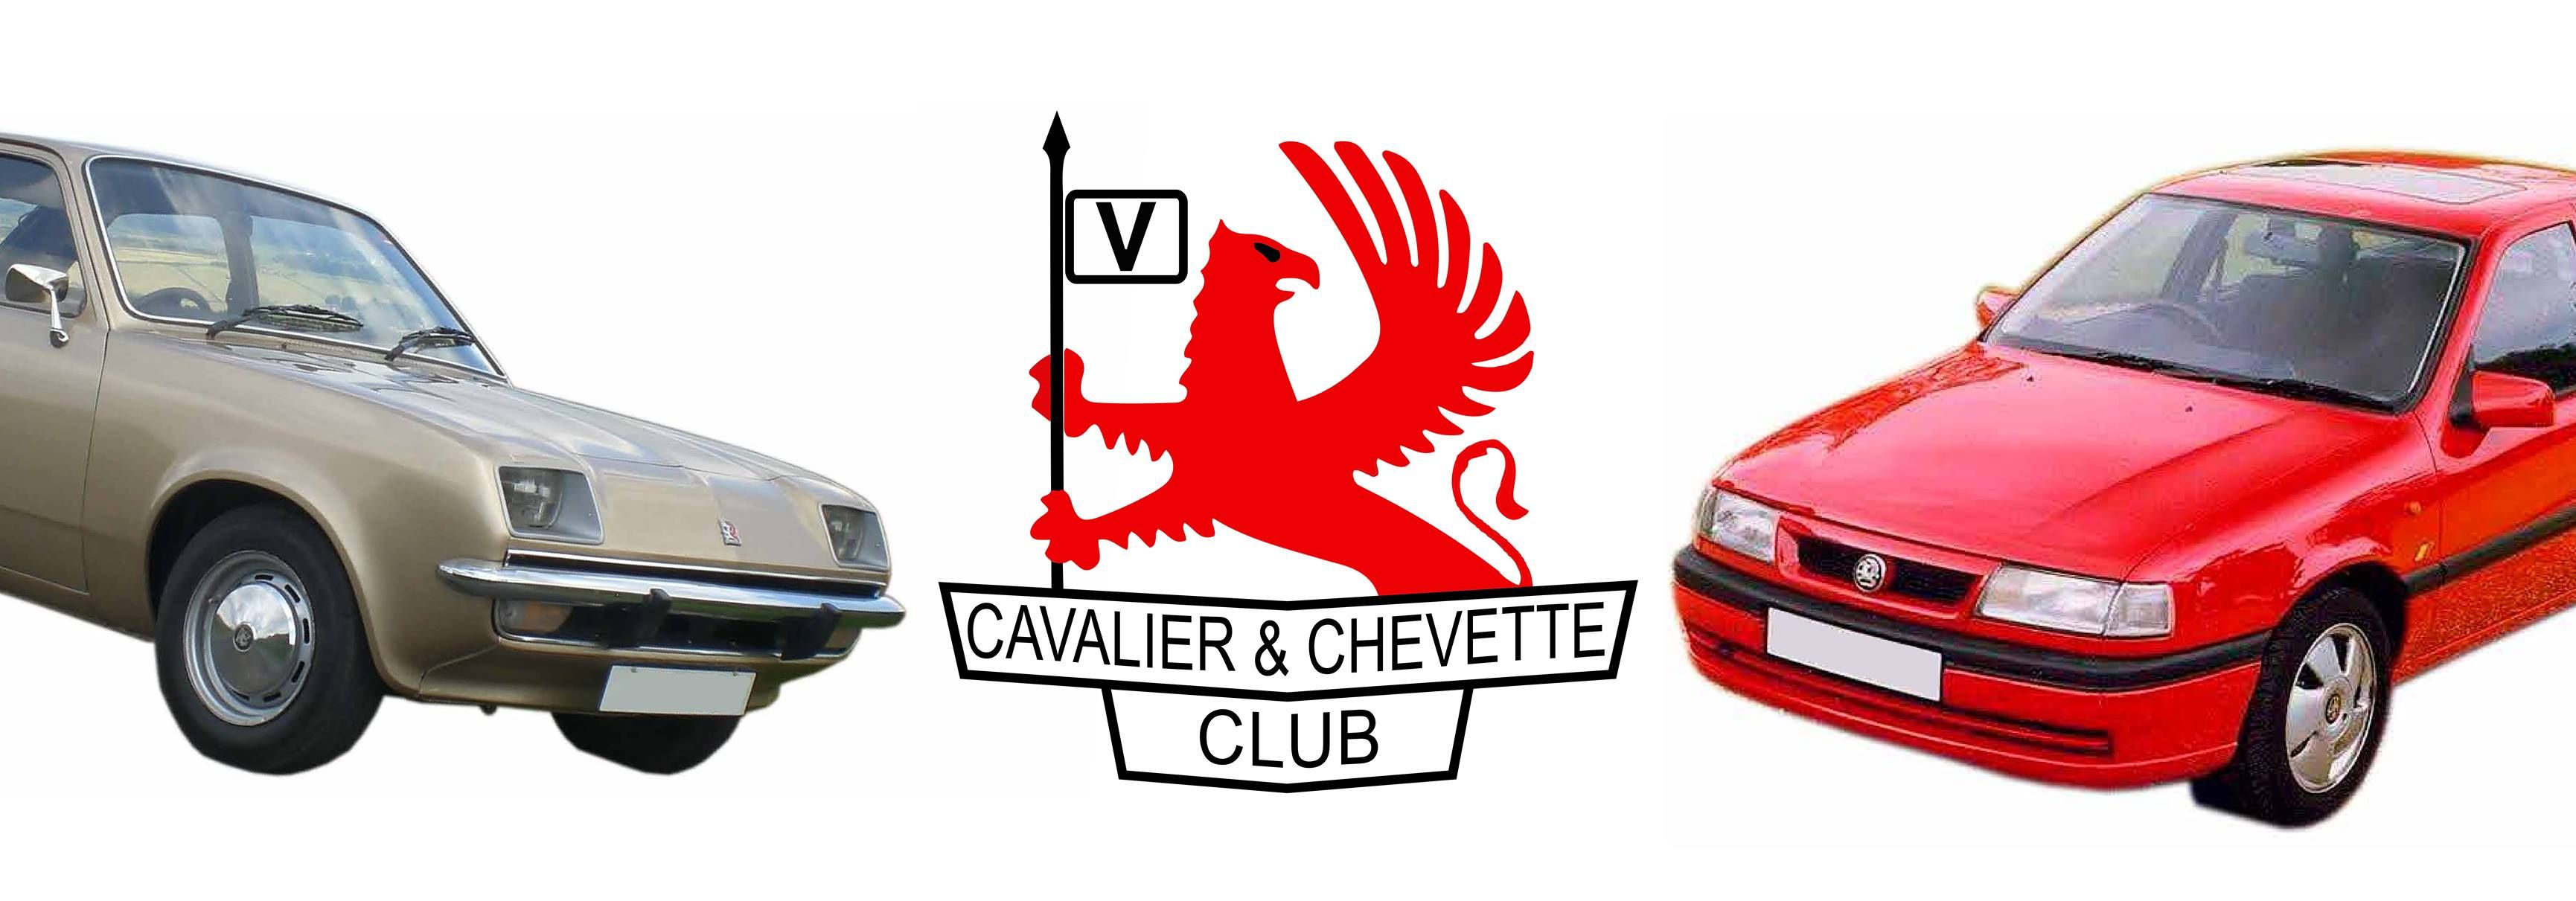 Cavalier and Chevette Club